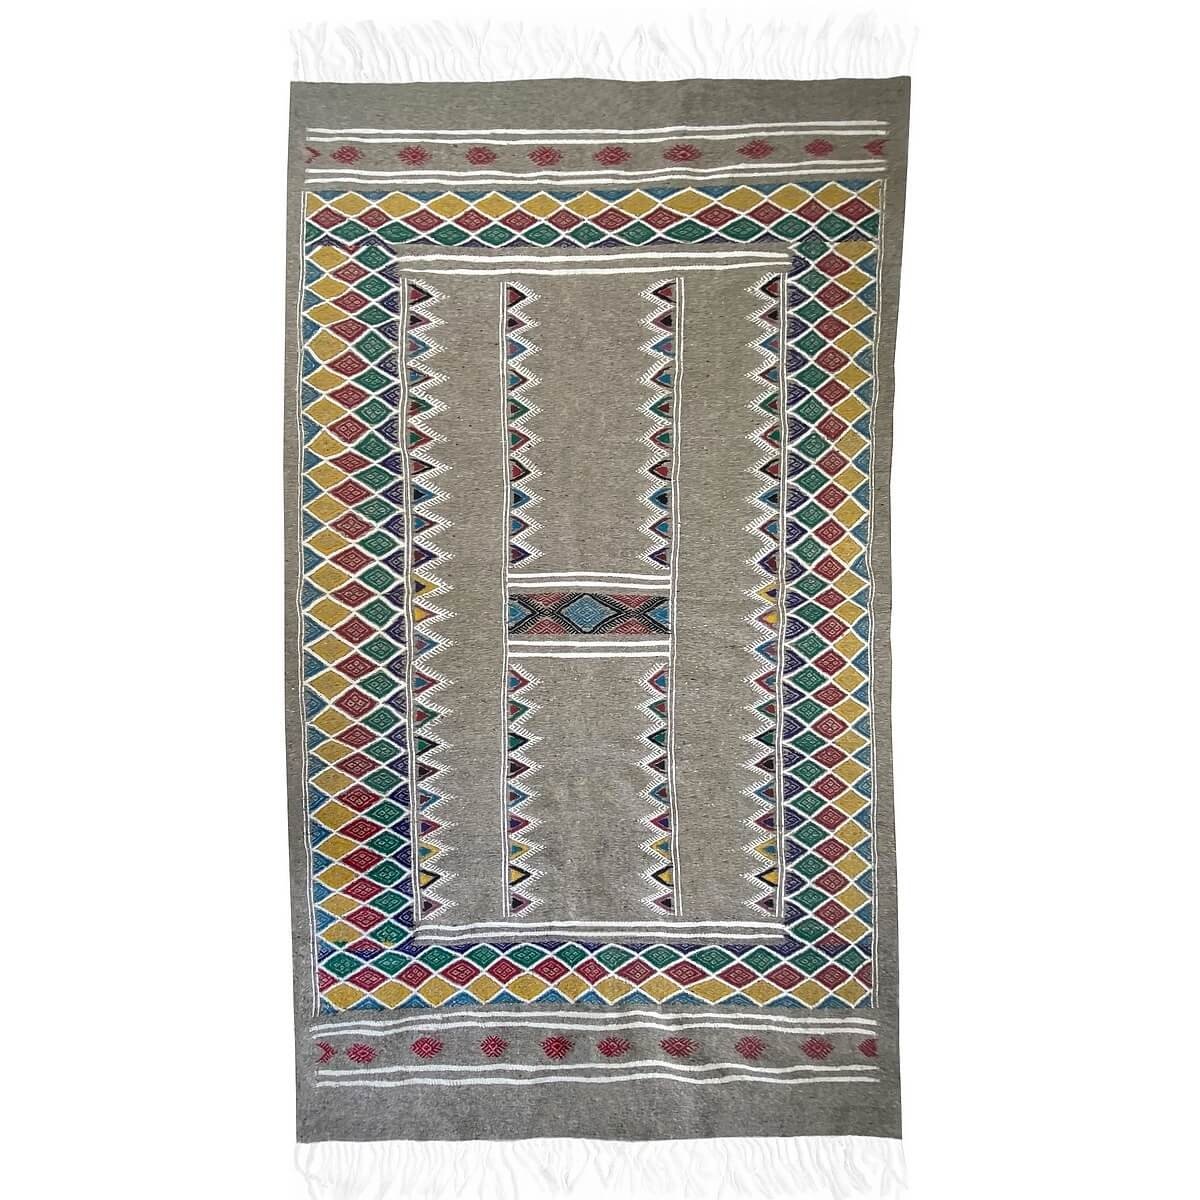 Tapis berbère Tapis Kilim Gayaya 132x250 Gris (Tissé main, Laine) Tapis kilim tunisien style tapis marocain. Tapis rectangulaire